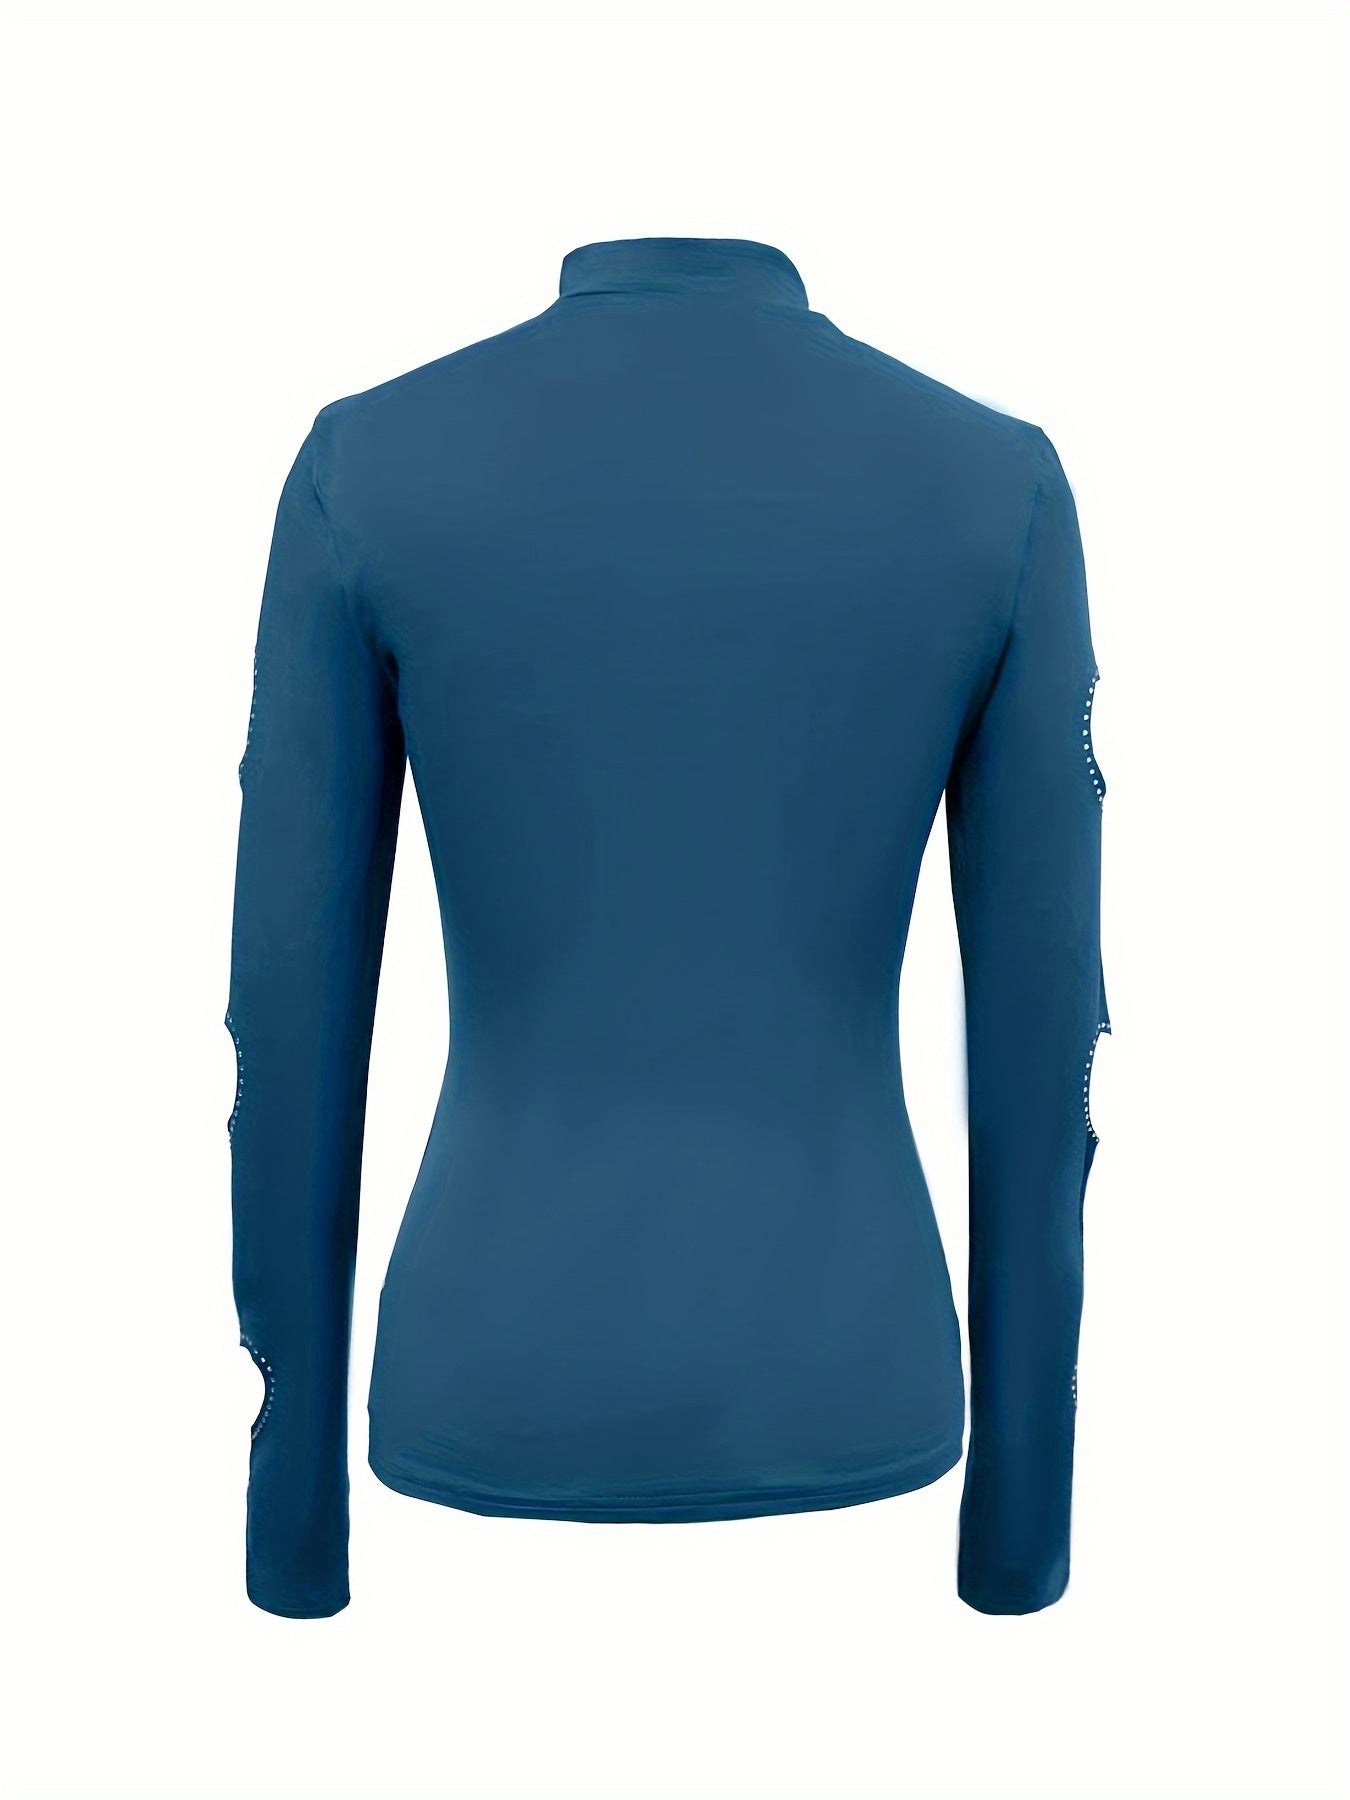 Cutout Rhinestone Mock Neck T-Shirt, Casual Long Sleeve Top For Spring & Fall, Women's Clothing